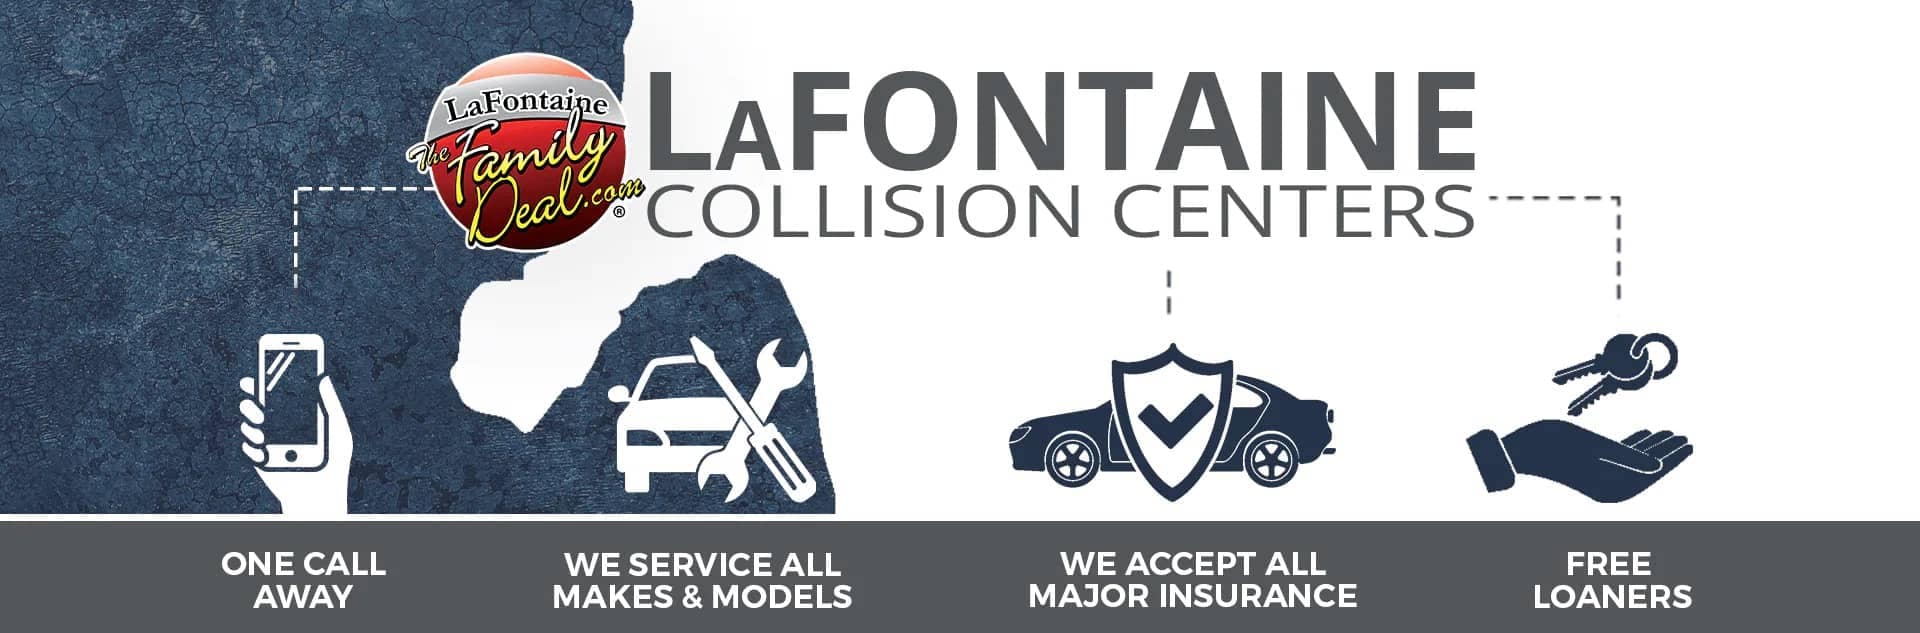 LaFontaine Collision Centers